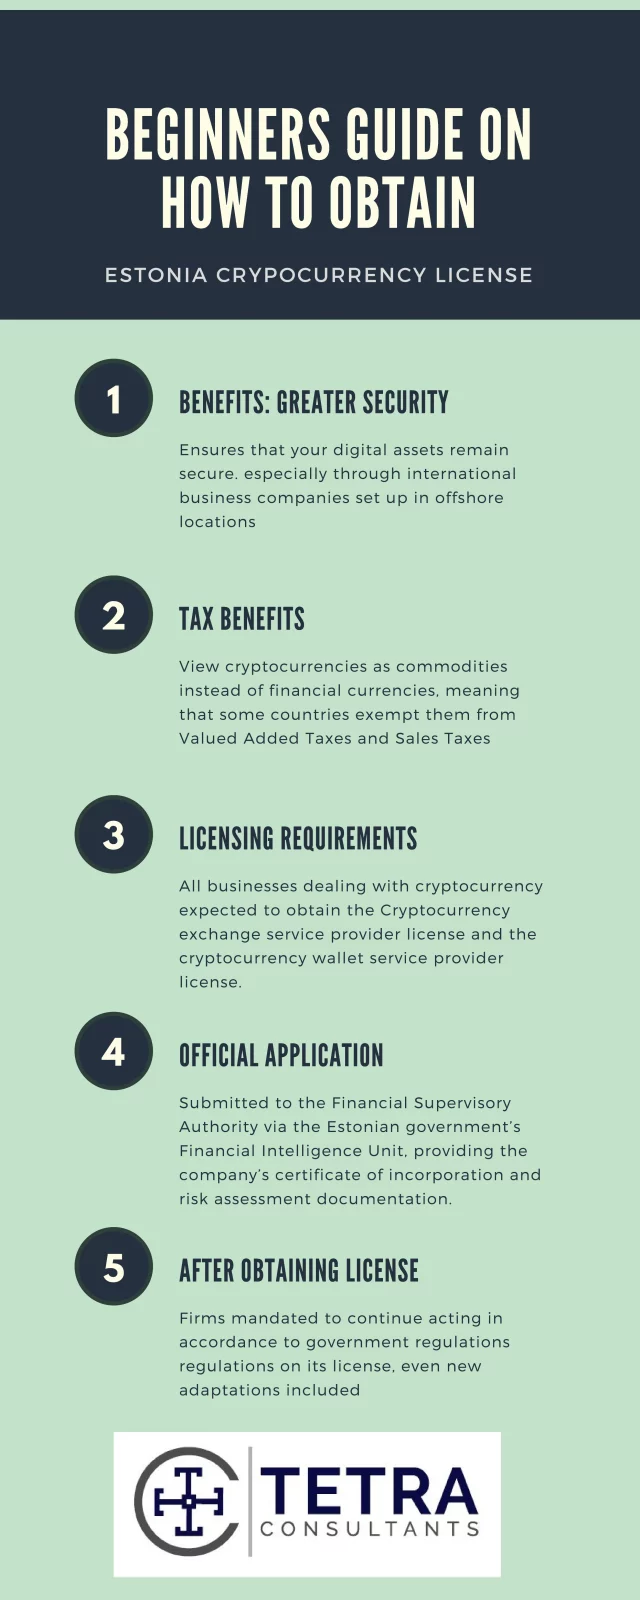 Estonia cryptocurrency license